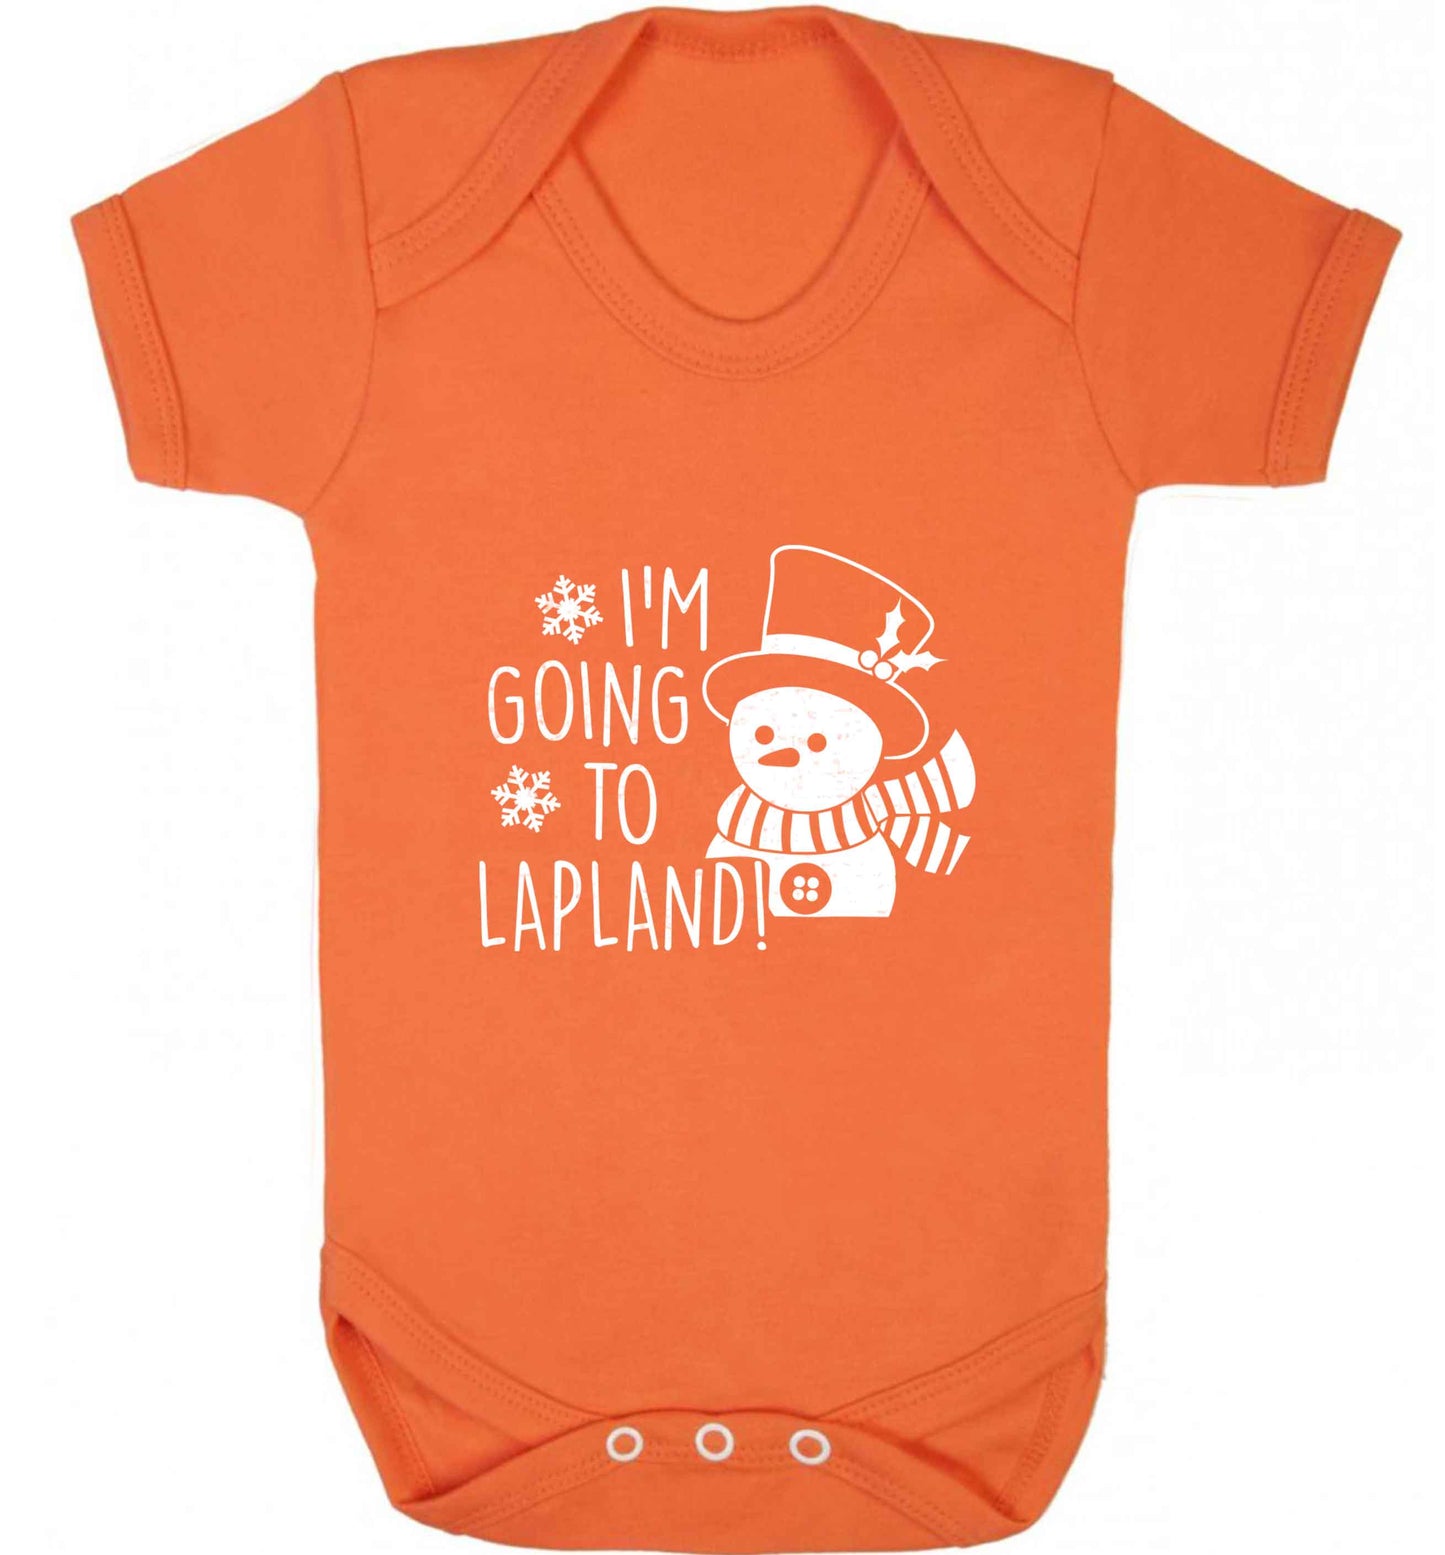 I'm going to Lapland baby vest orange 18-24 months